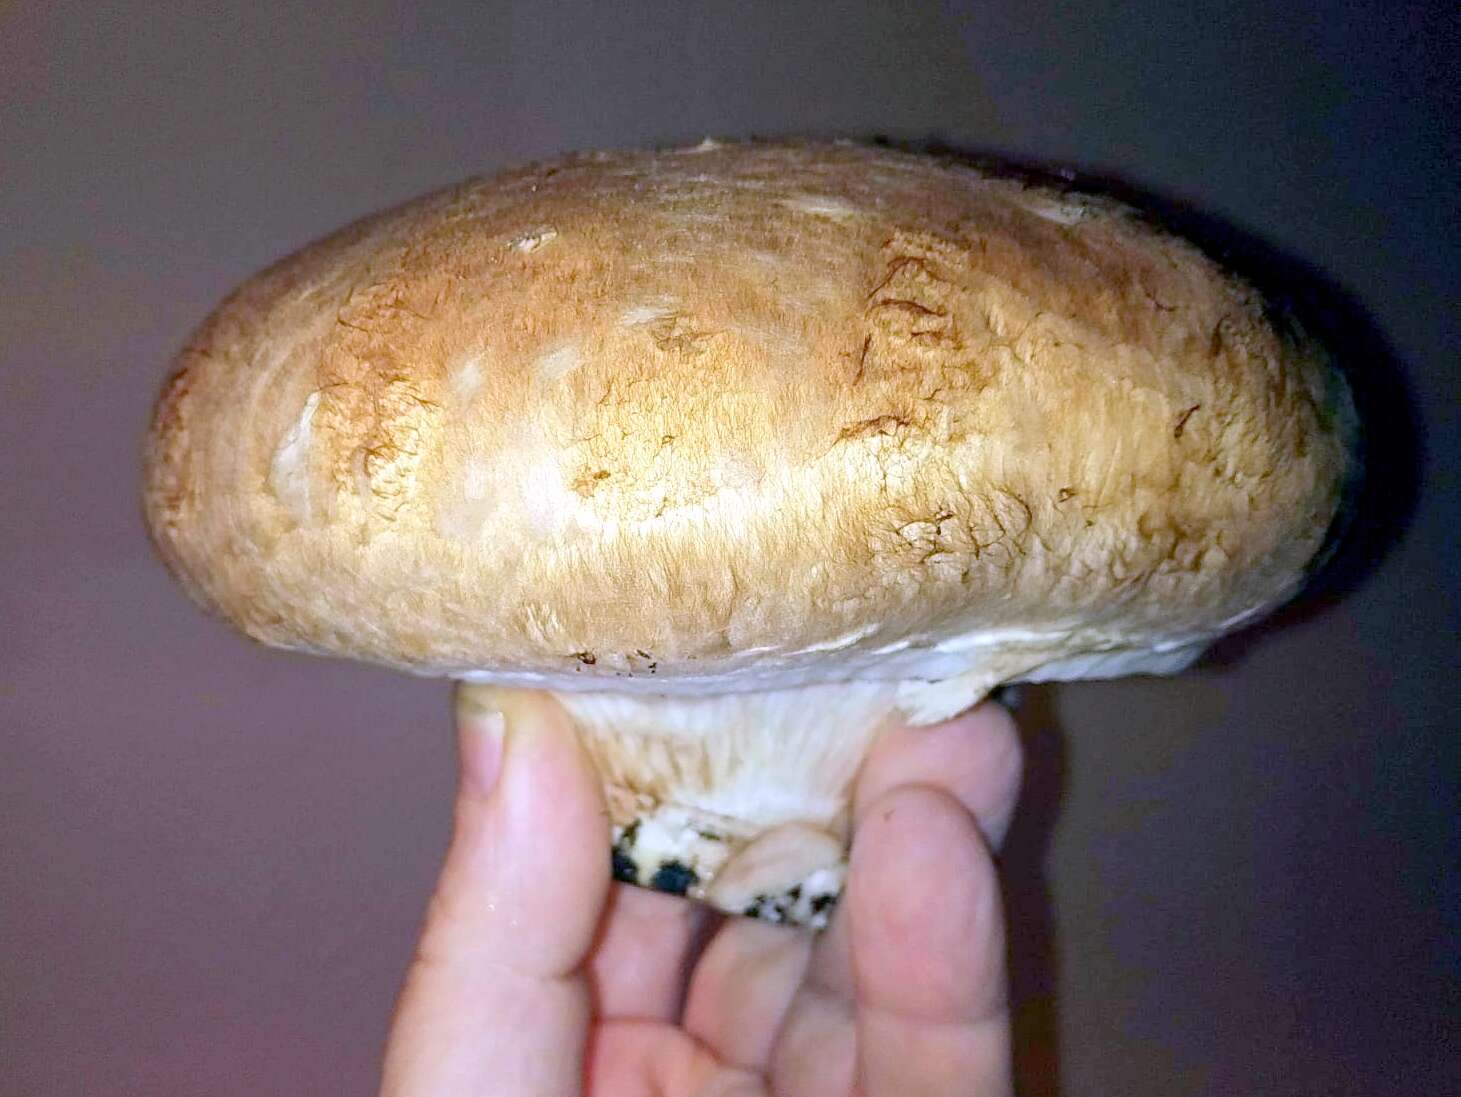 Image of commercial mushroom